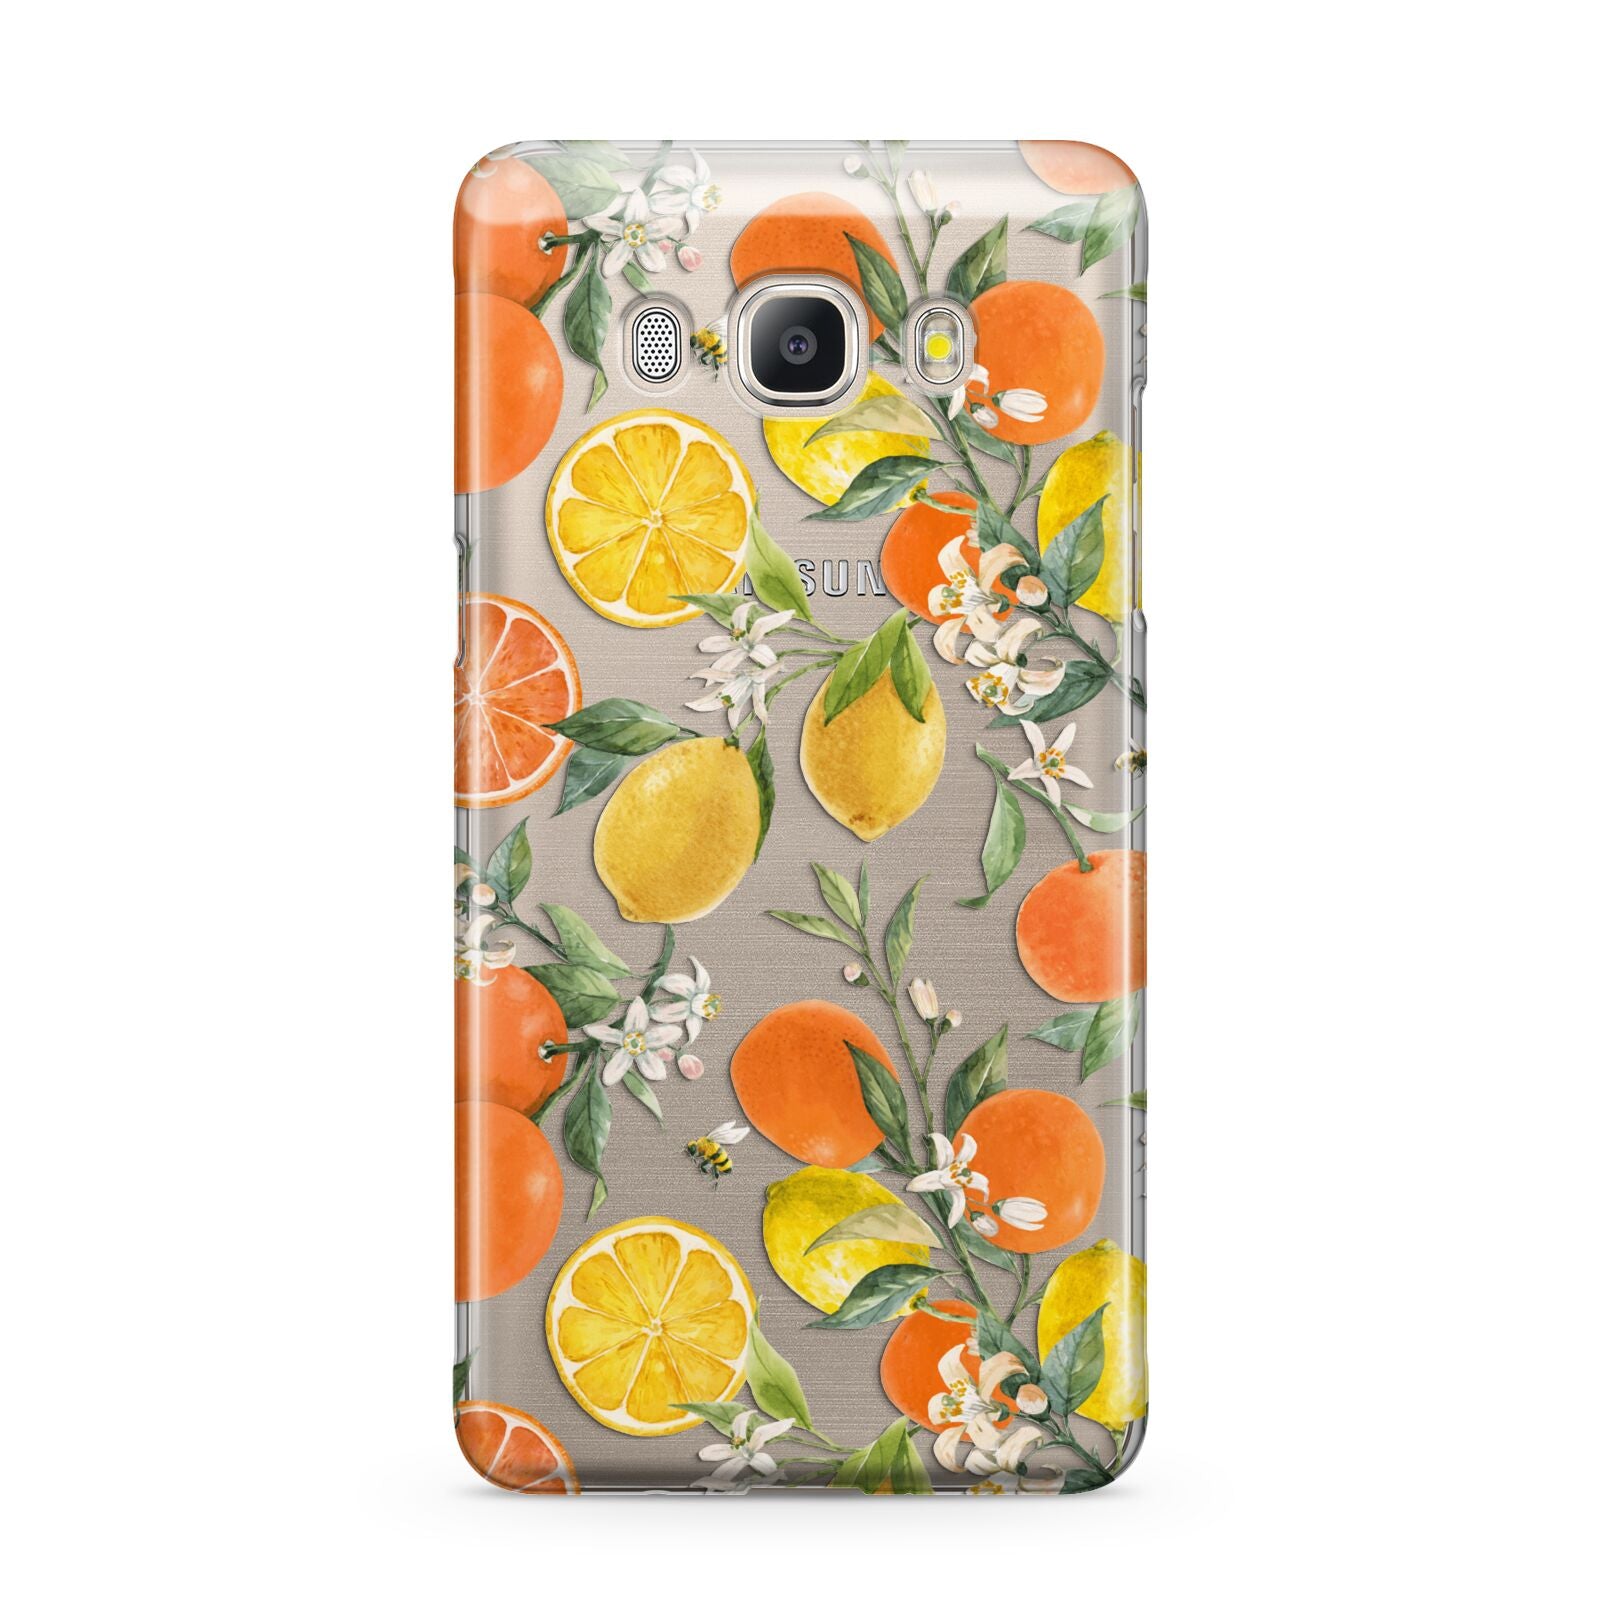 Lemons and Oranges Samsung Galaxy J5 2016 Case